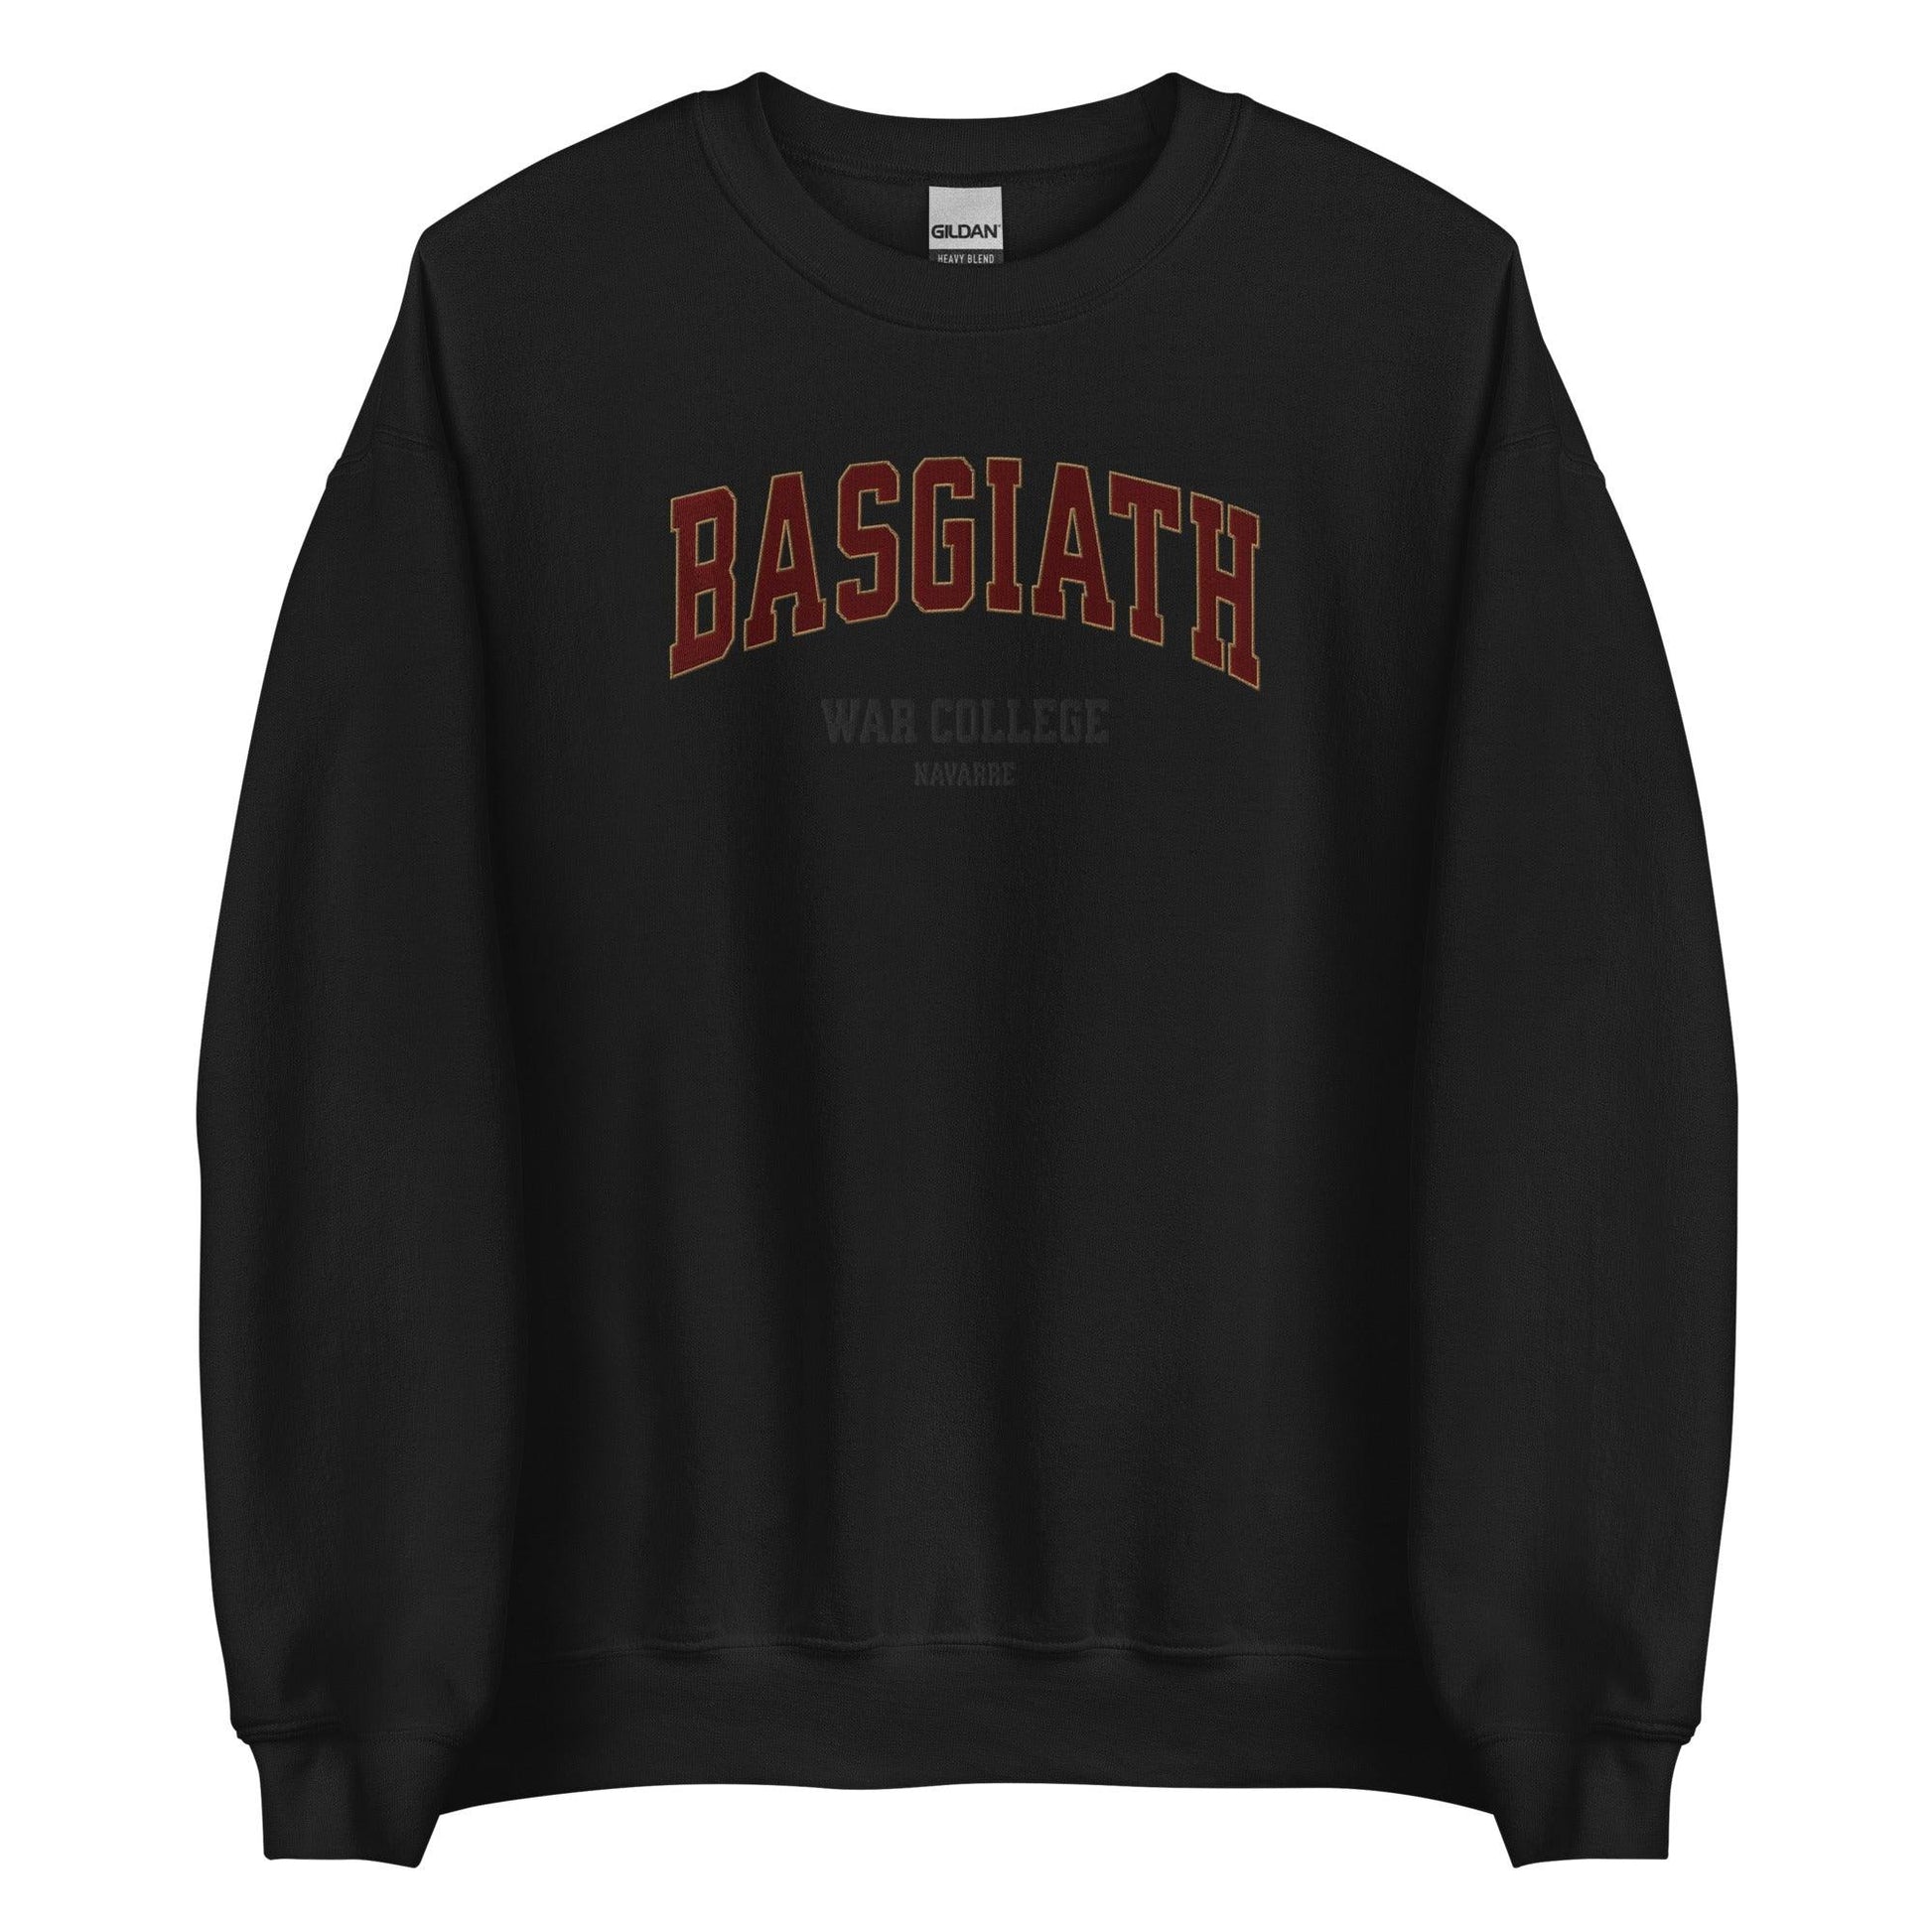 Basgiath War College Embroidered Sweatshirt - The Bean Workshop - embroidered, fourth wing, rebecca yarros, sweatshirt